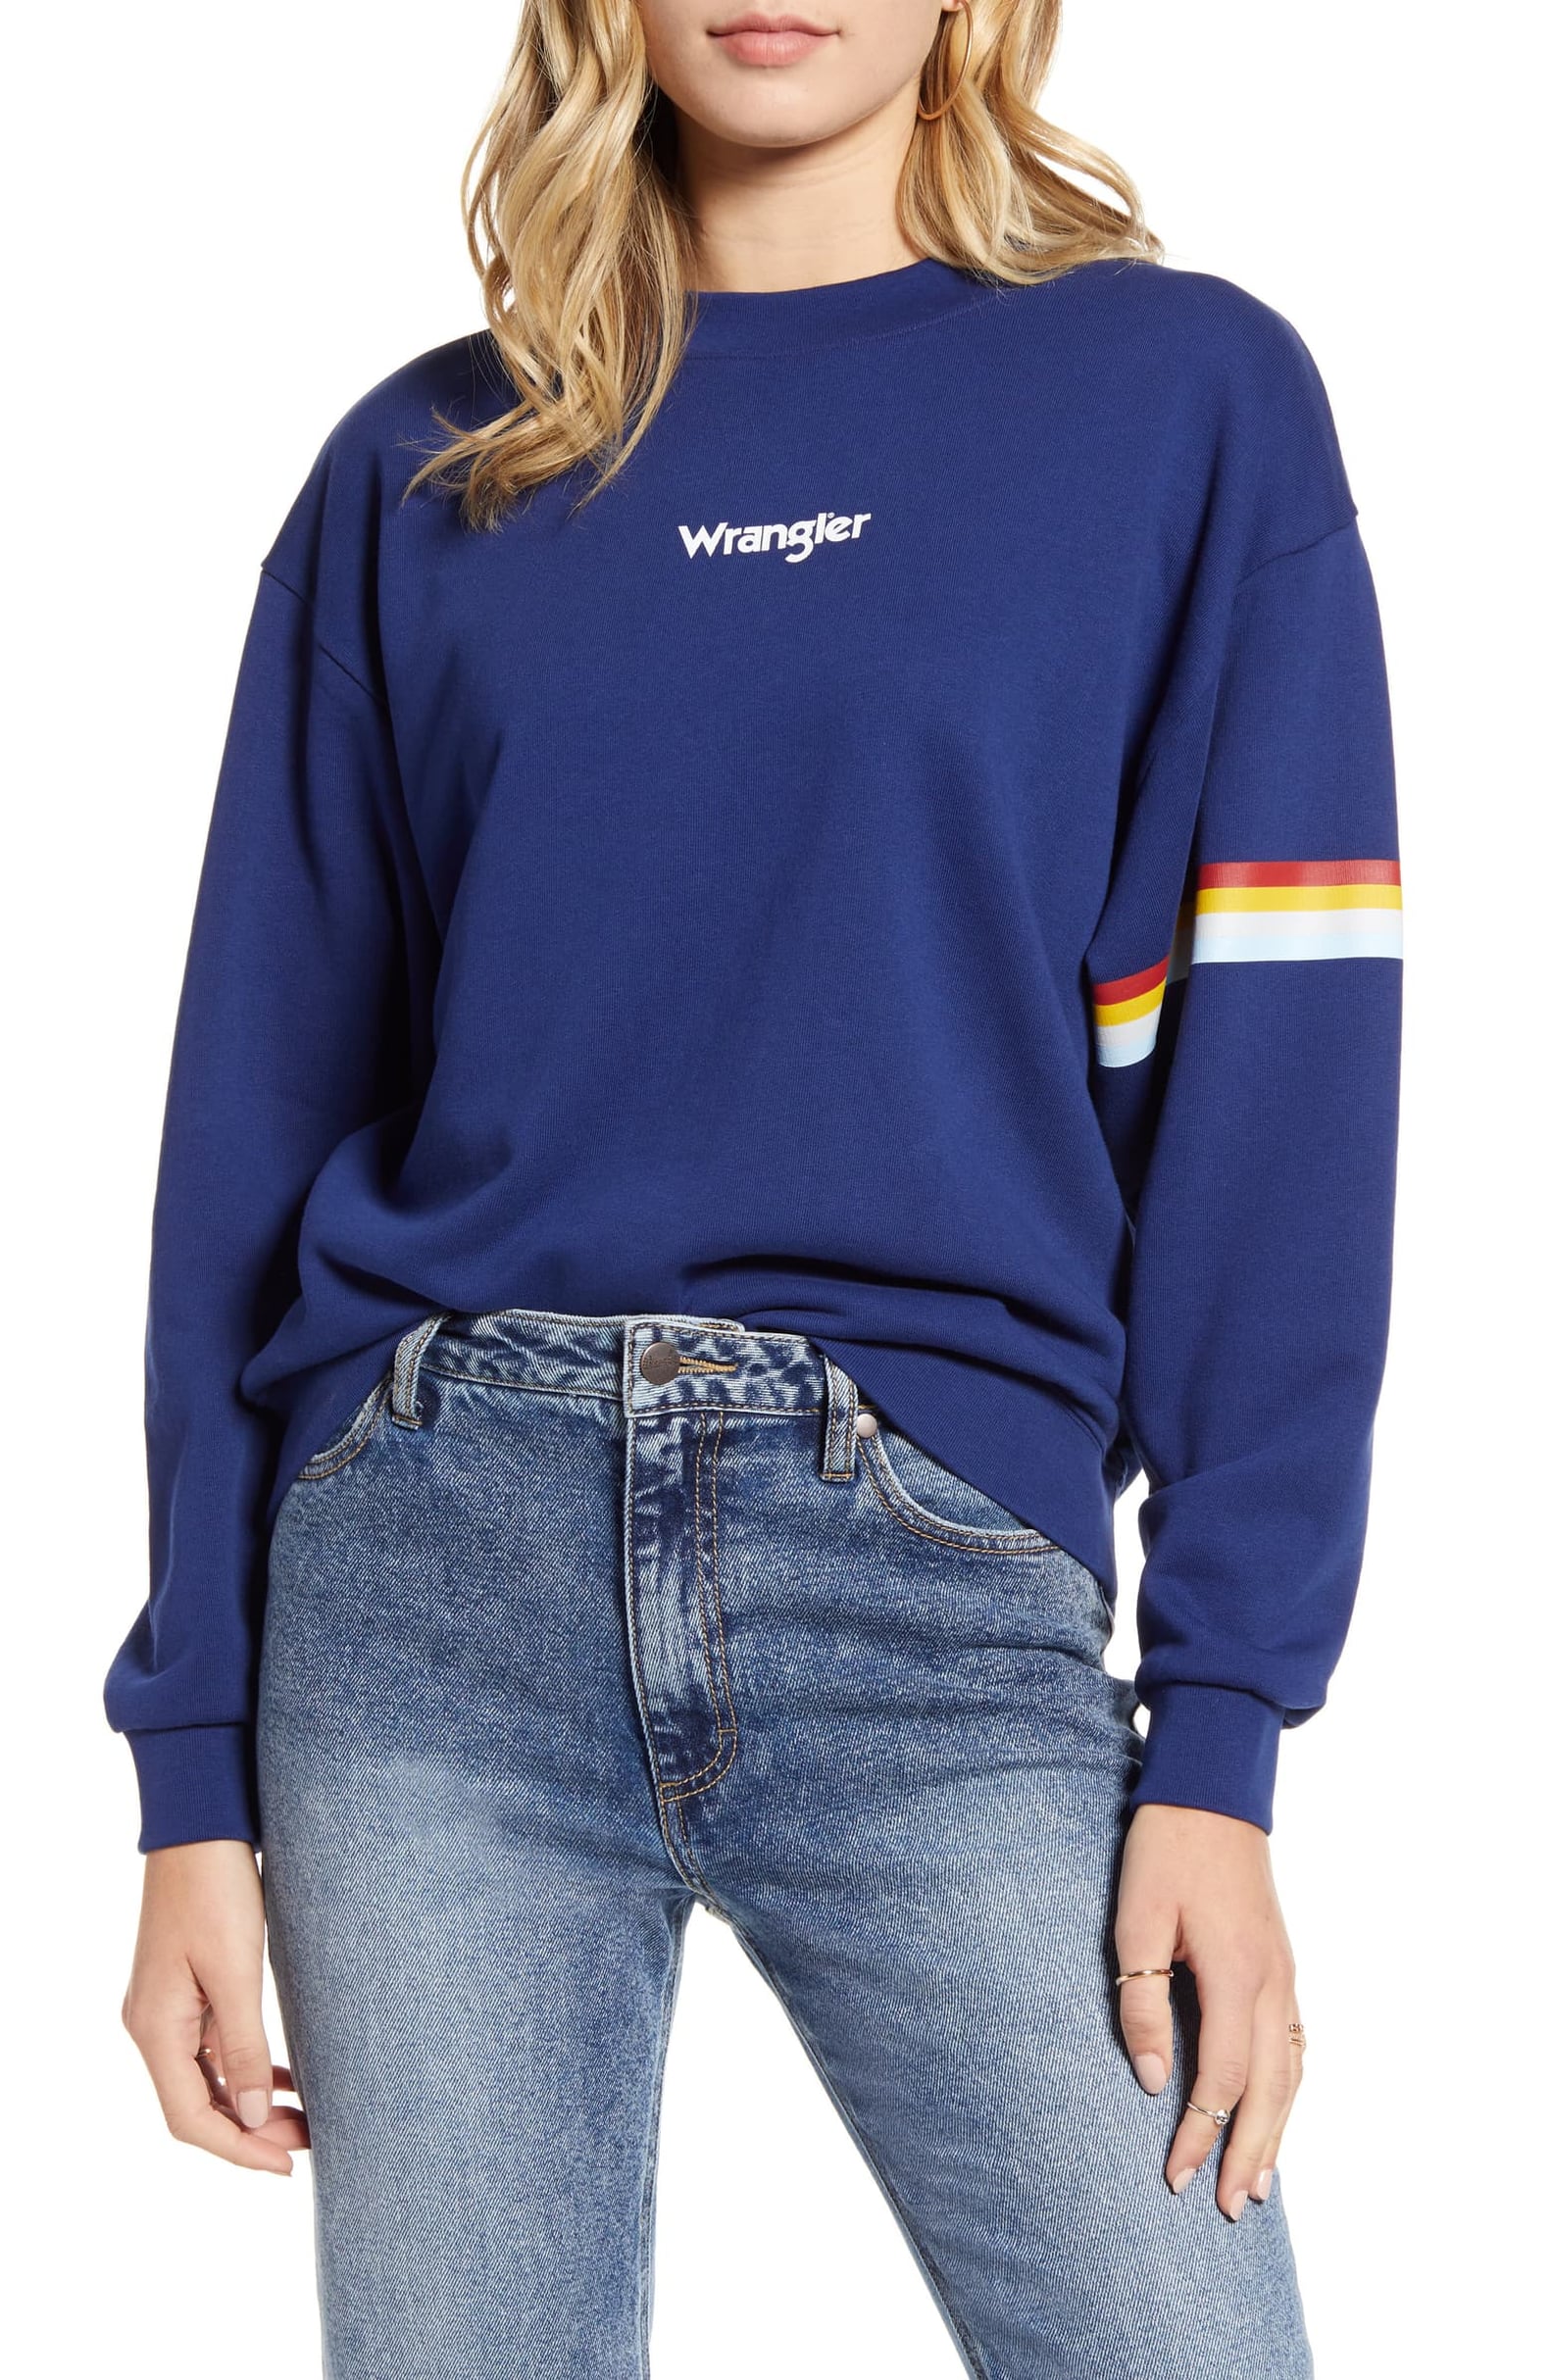 The Best Vintage-Inspired Sweatshirts For Fall 2019 | POPSUGAR Fashion